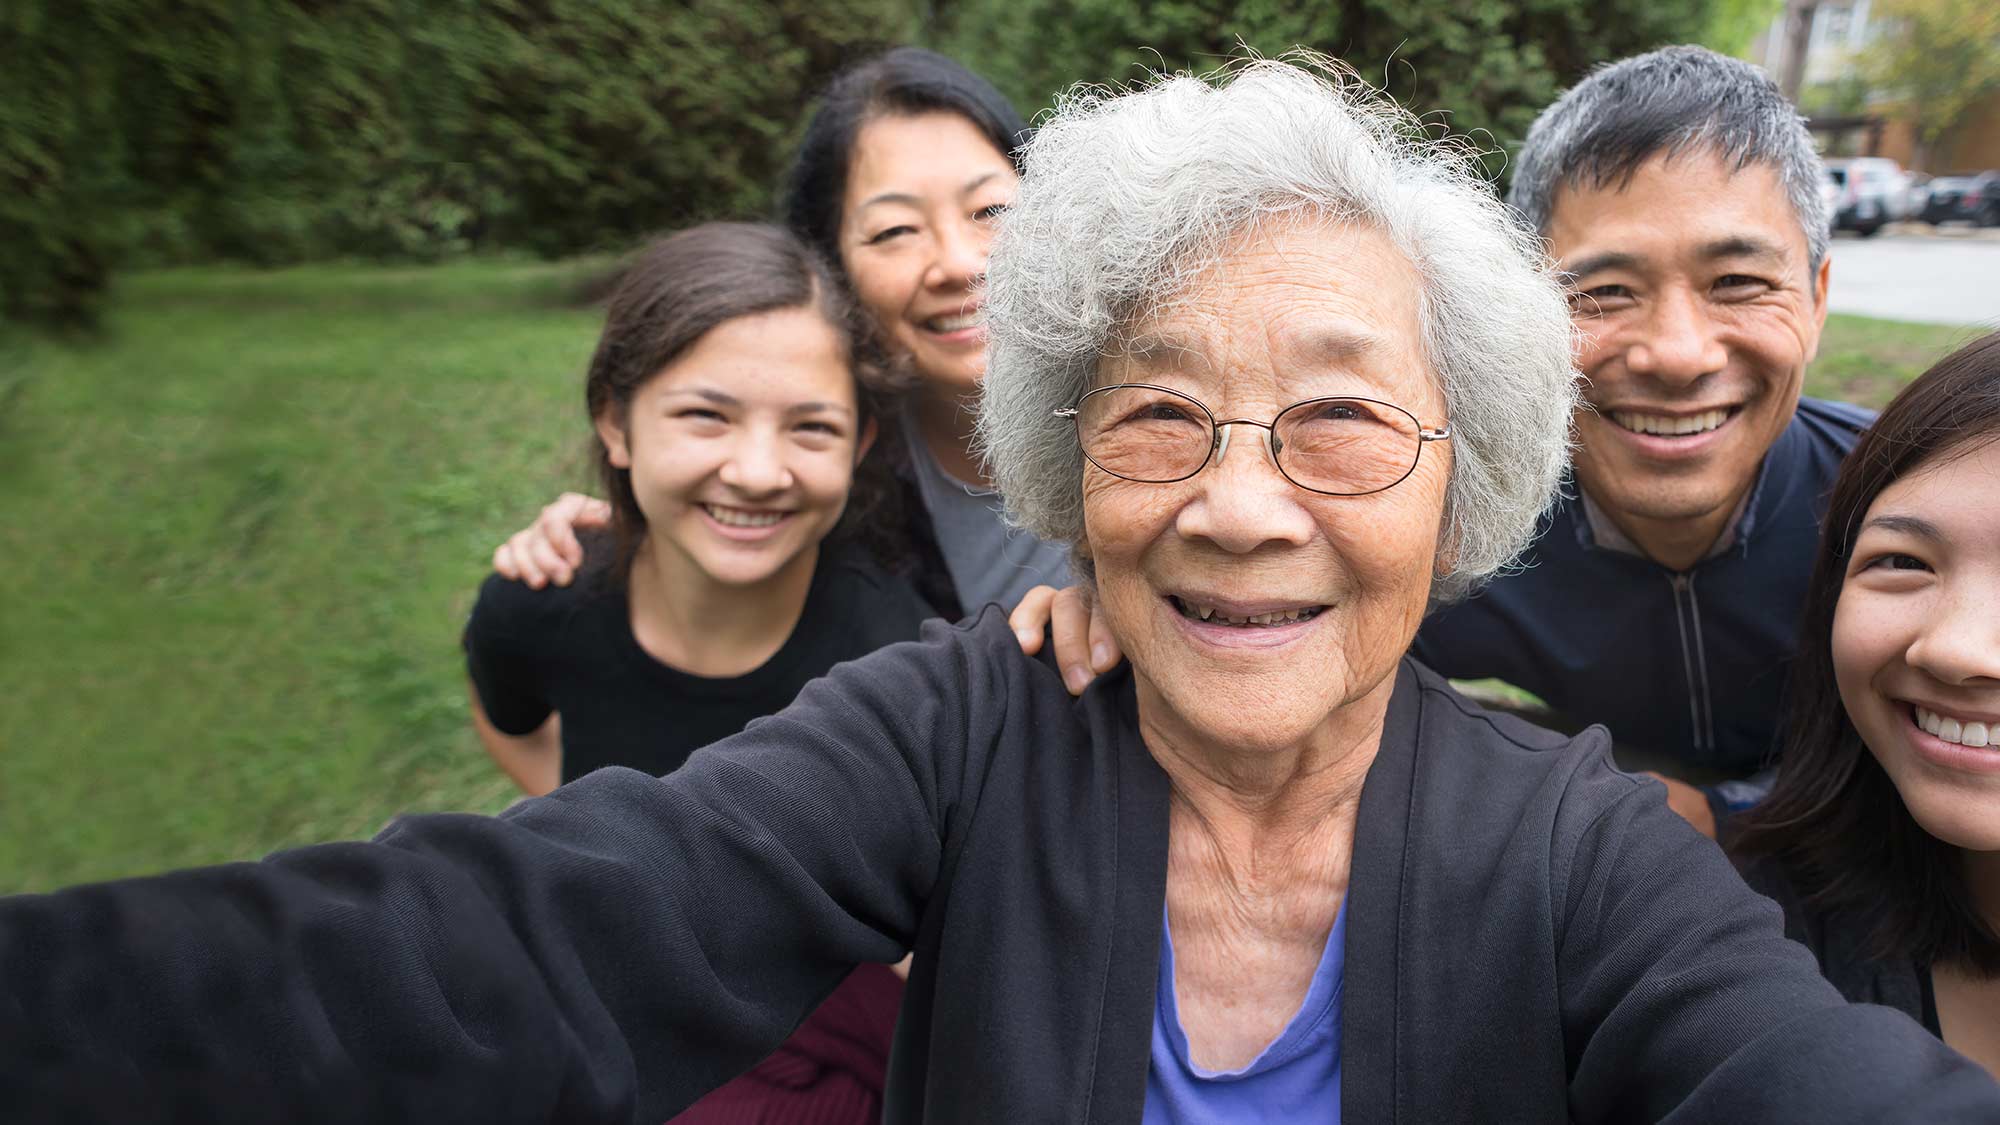 Asian American family taking a selfie outside